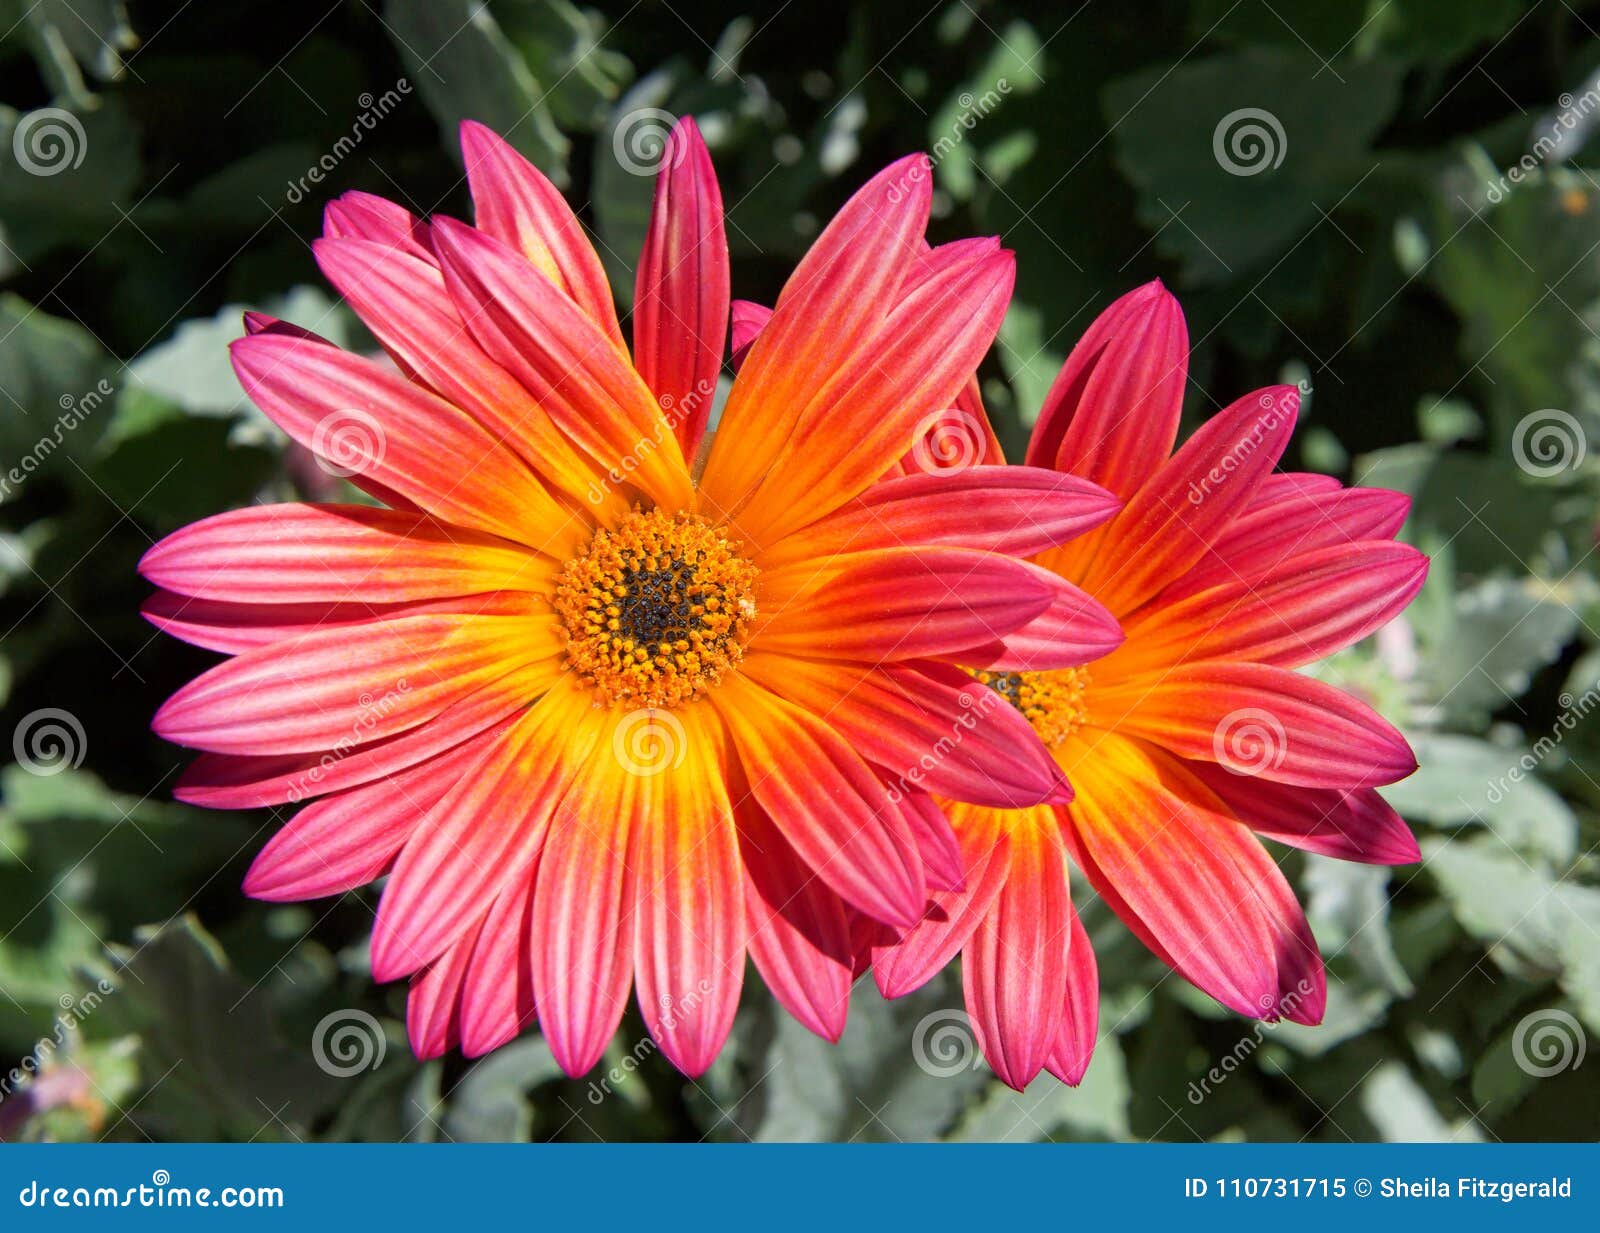 Gazania Rigen Daisy Like Flowers In Bright Light Stock Image Image Of Beauty Fresh 110731715